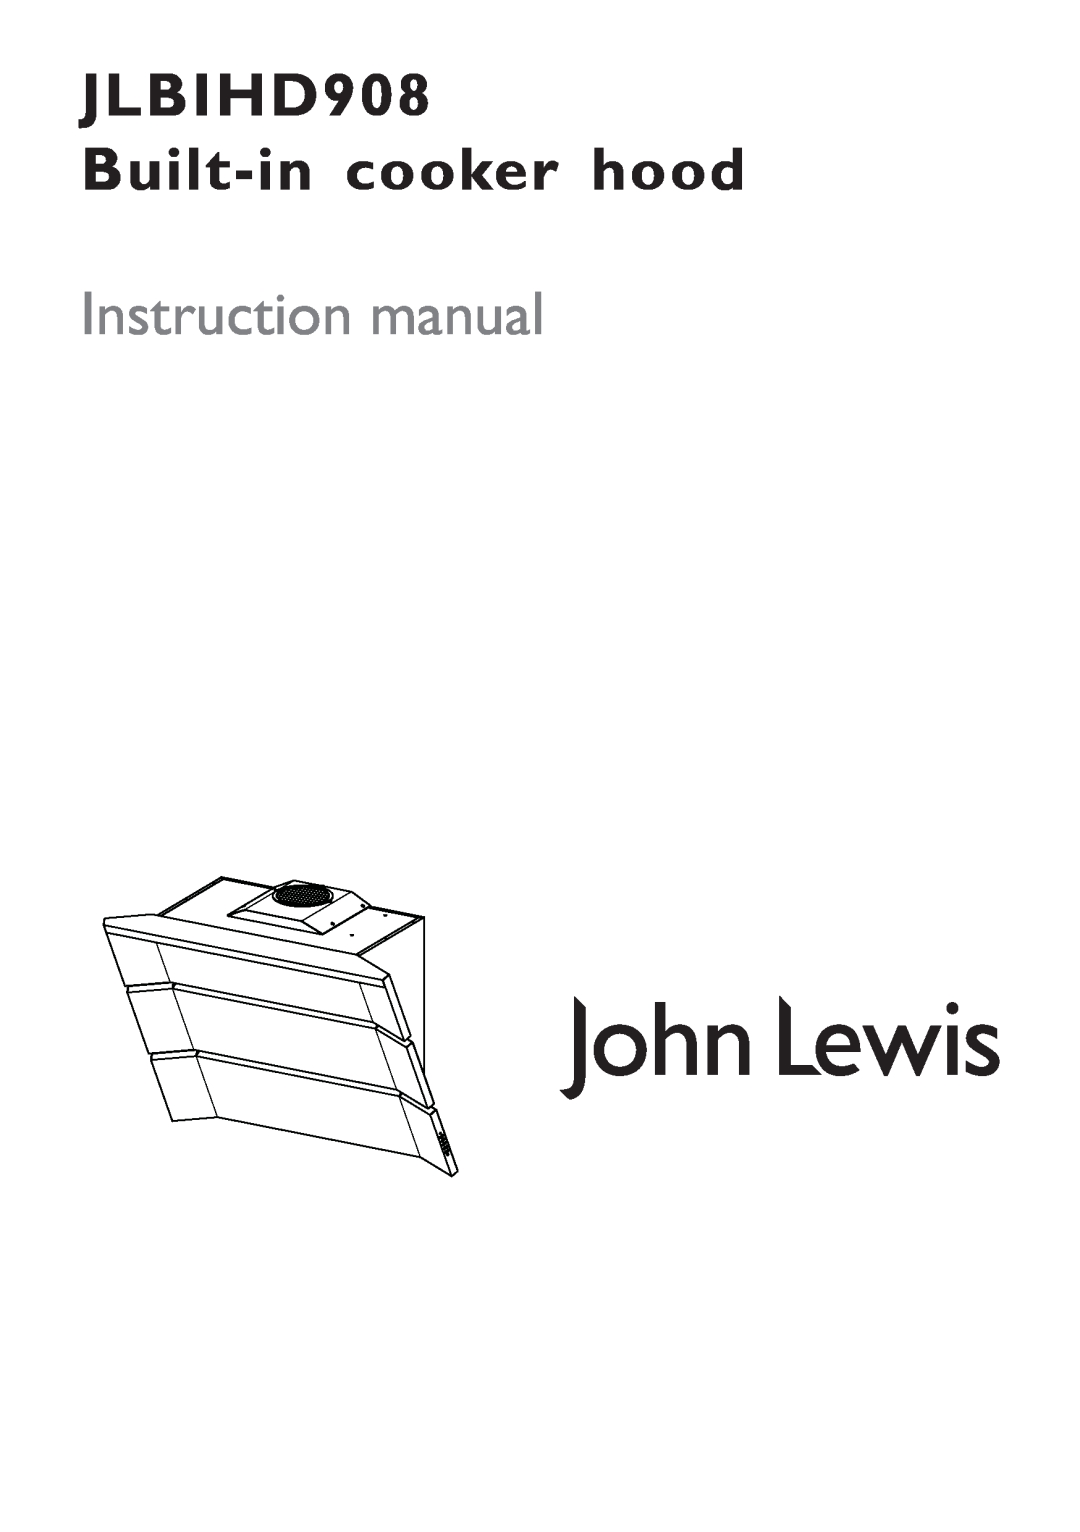 John Lewis instruction manual JLBIHD908 Built-in cooker hood 